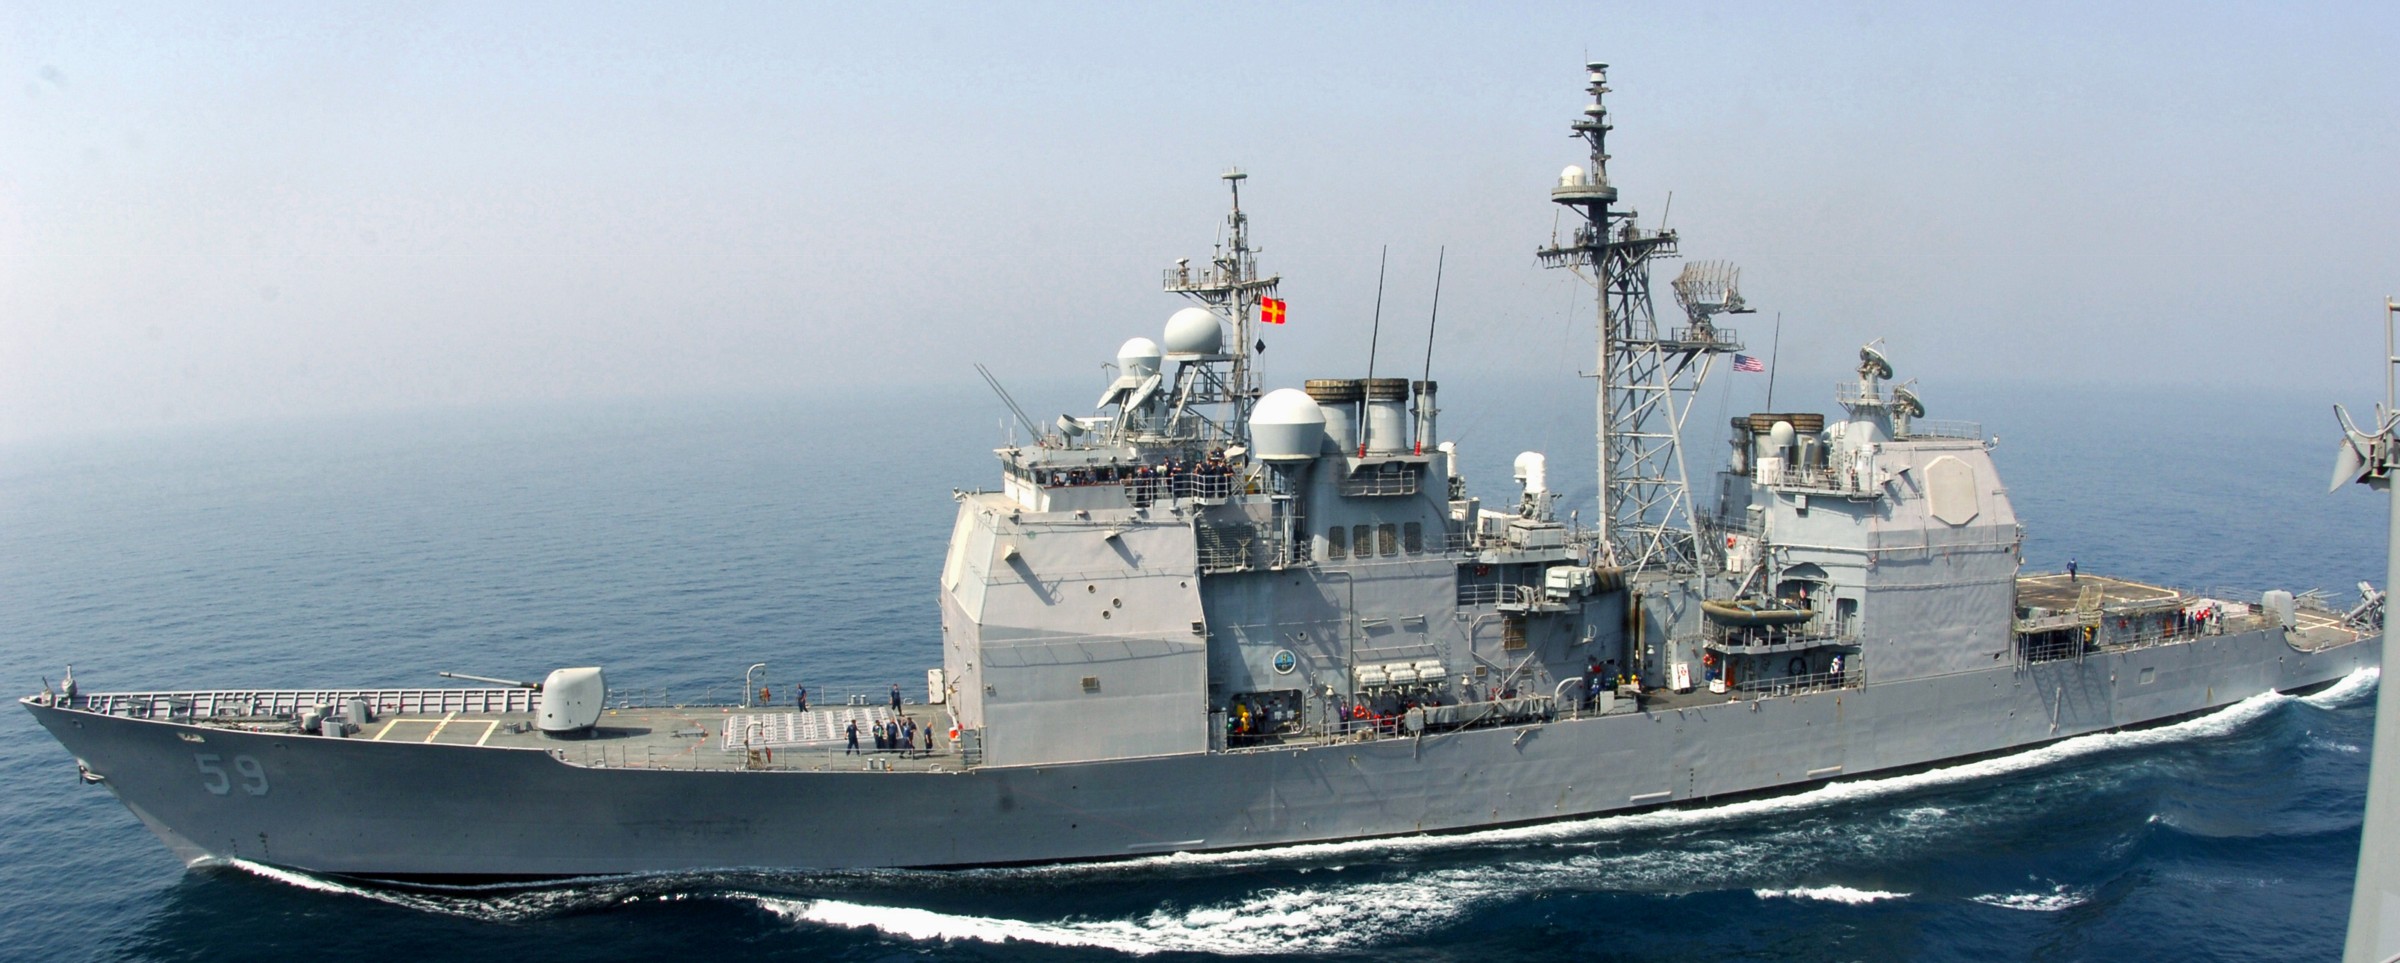 cg-59 uss princeton ticonderoga class guided missile cruiser aegis us navy arabian sea 13